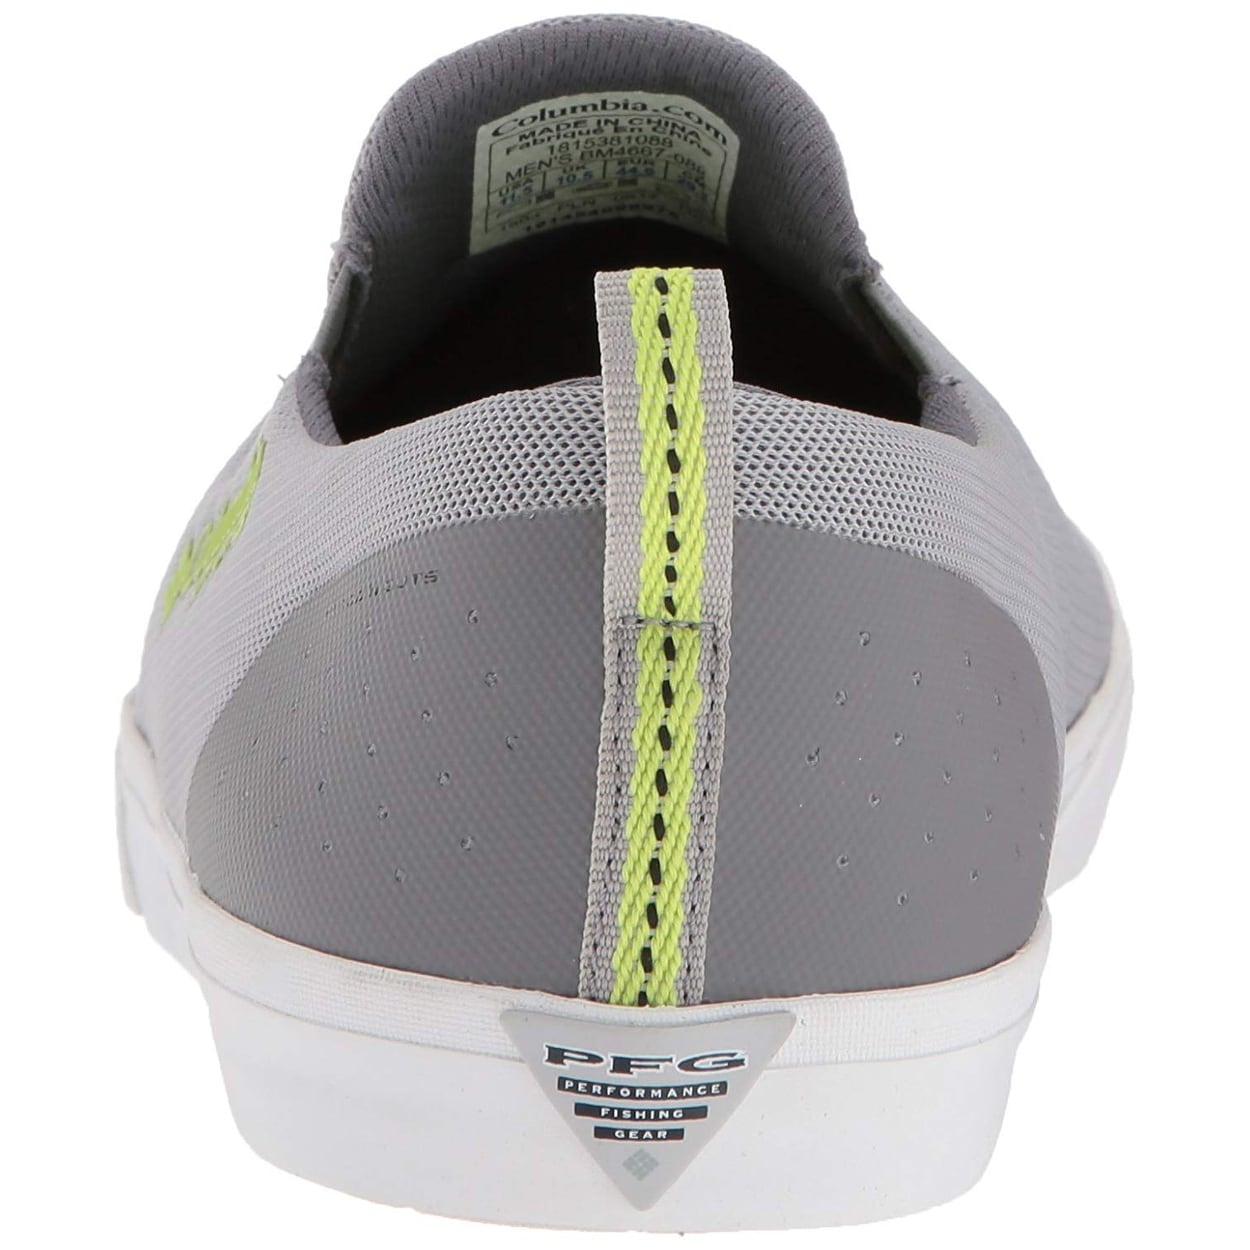 columbia slip resistant shoes